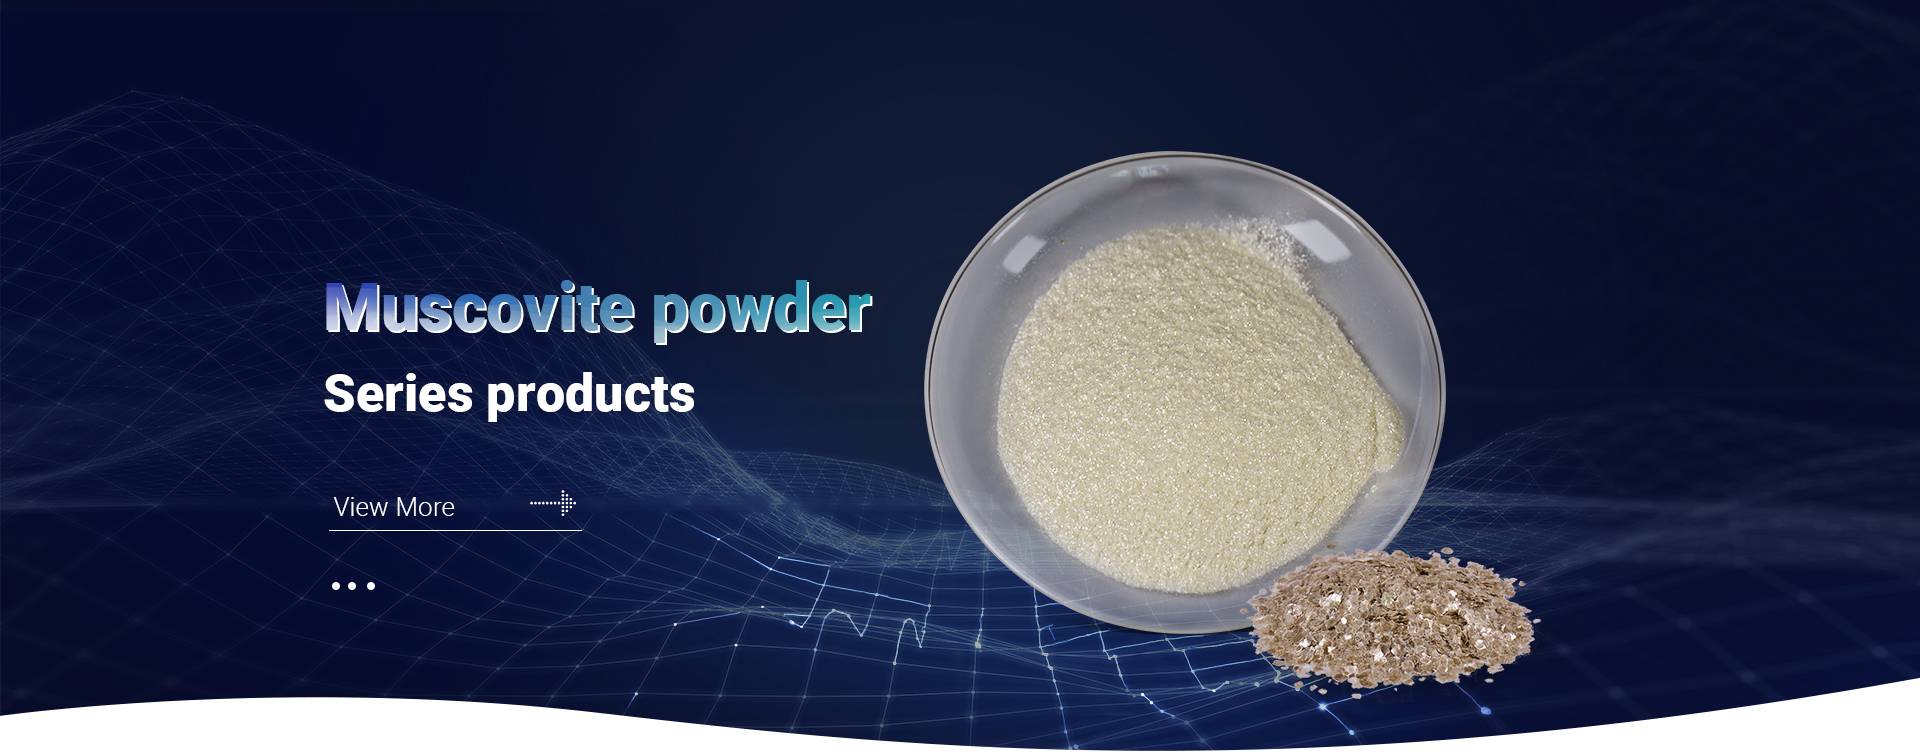 300hc Cosmetic Grade Synthetic Mica Powder - China Mica Powder